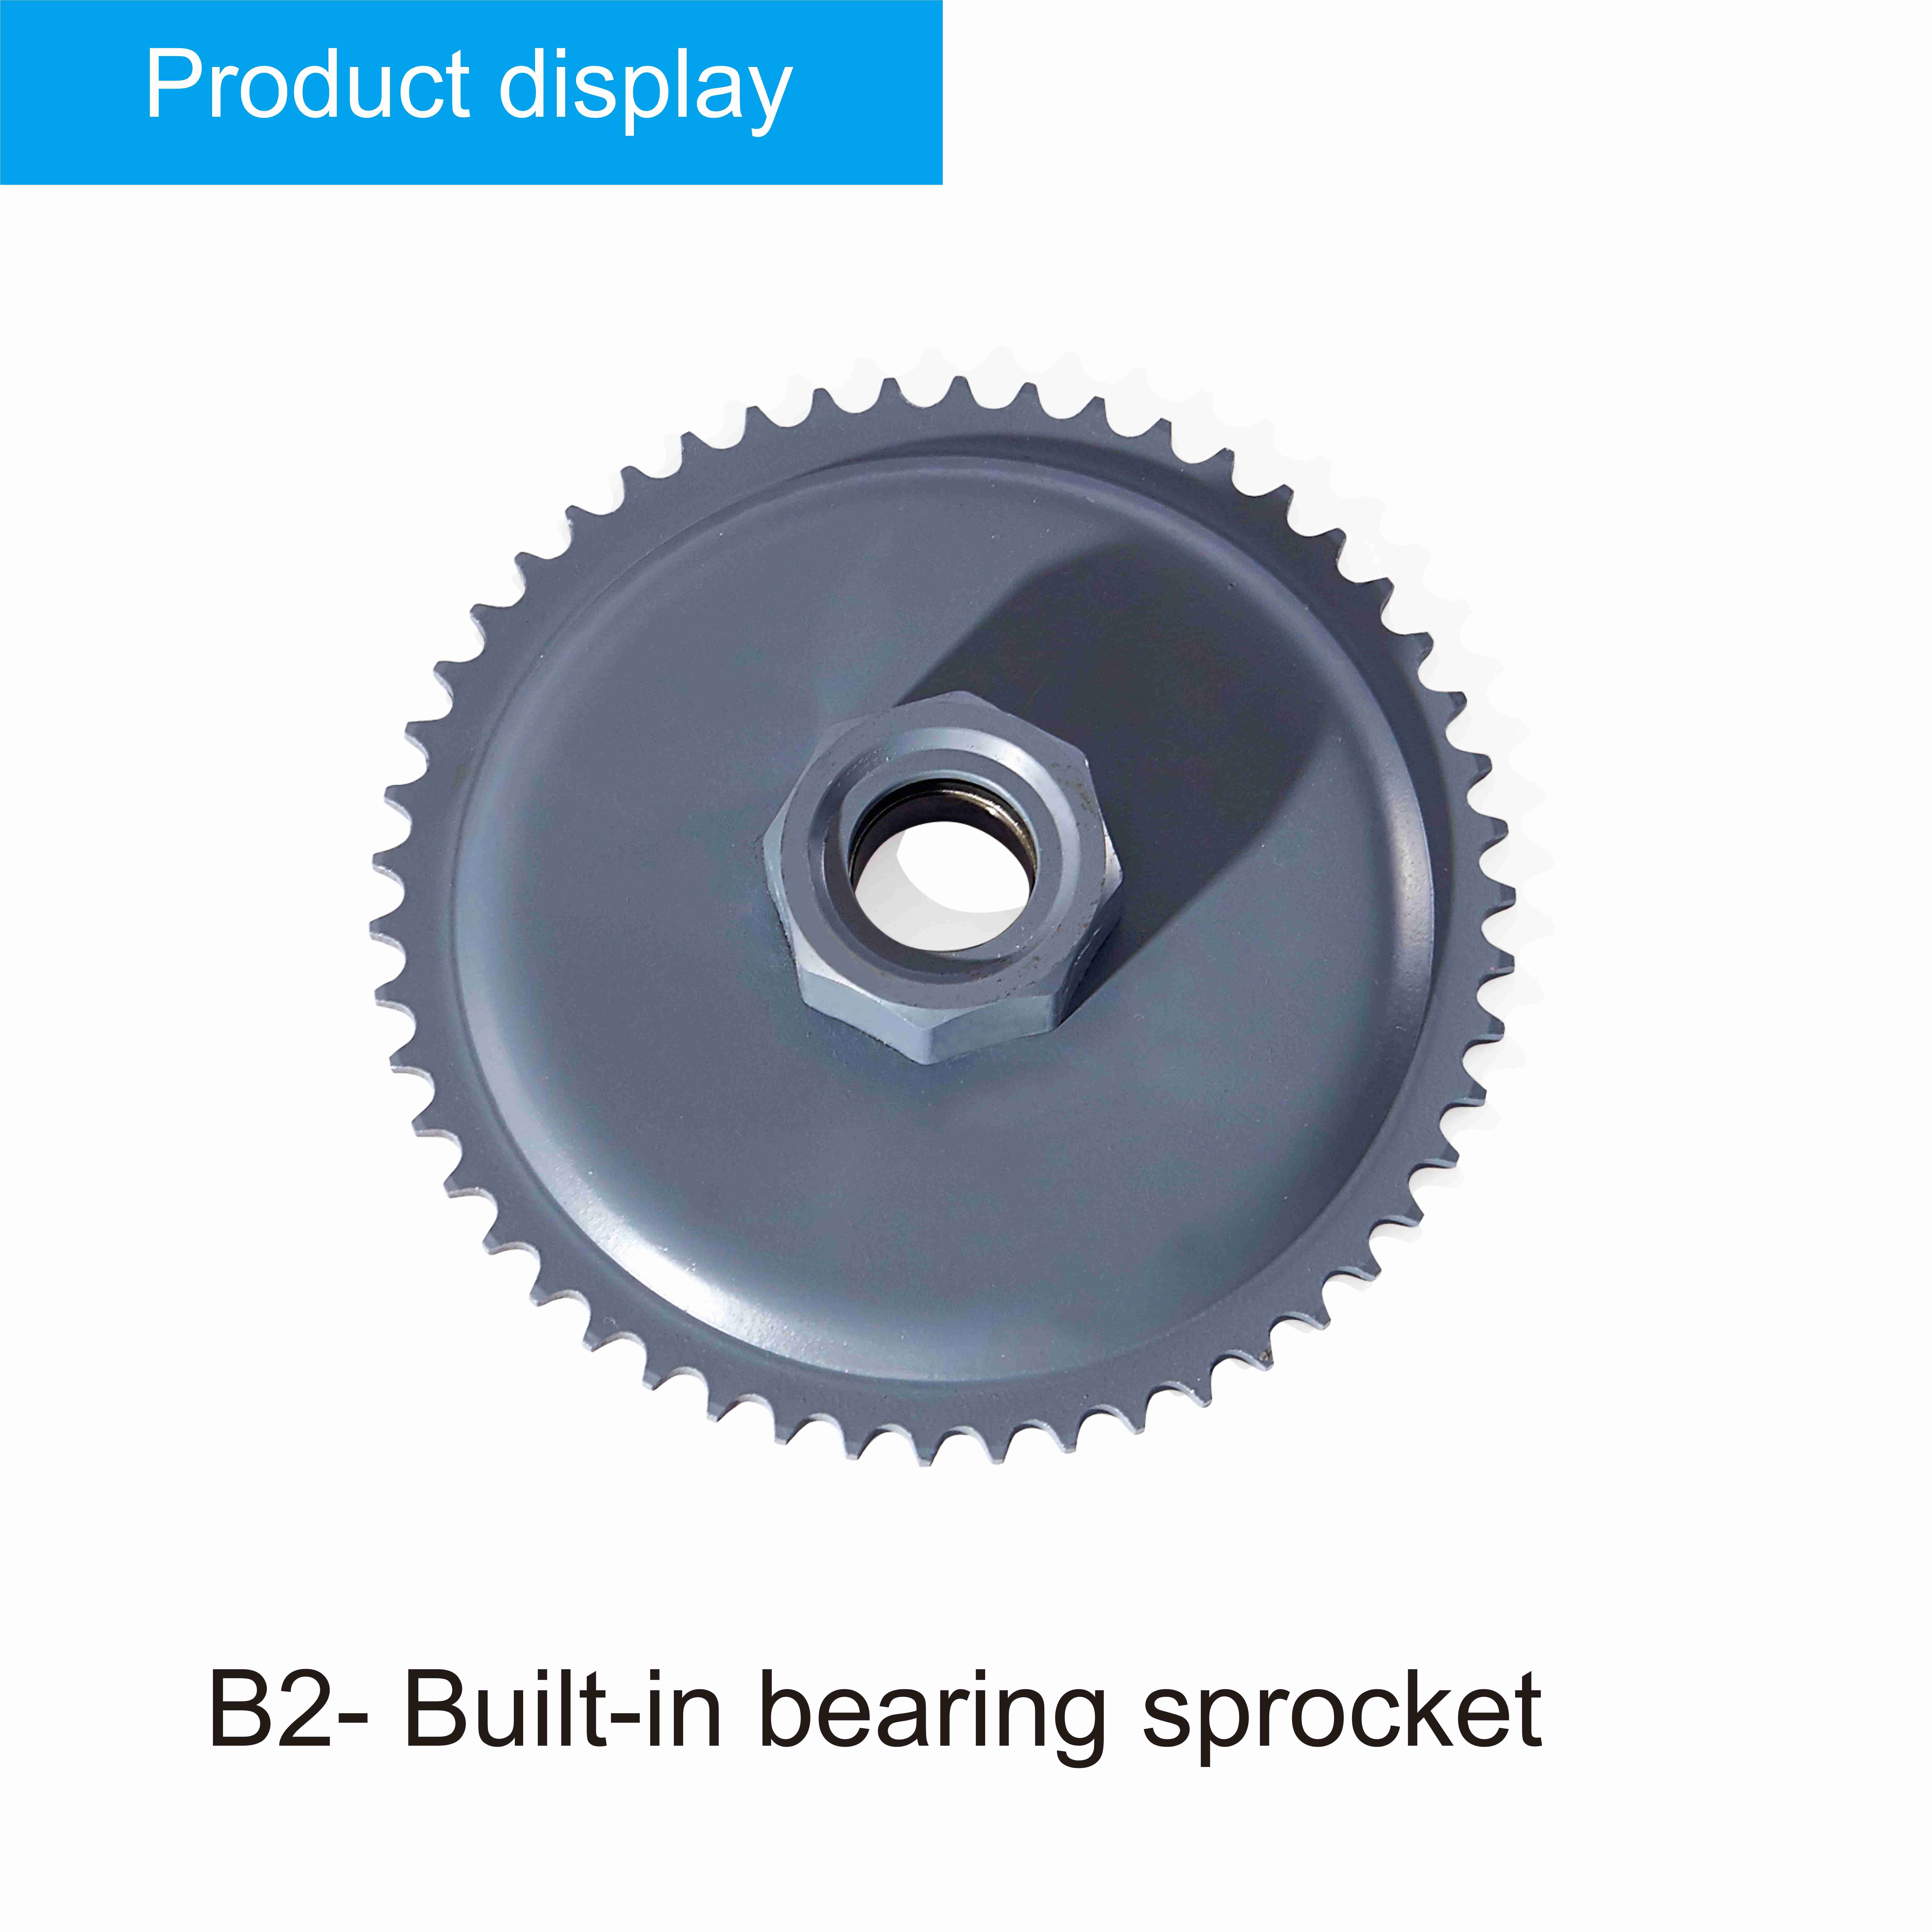 B2 သည် bearing sprocket-1 တွင်တည်ဆောက်ထားသည်။